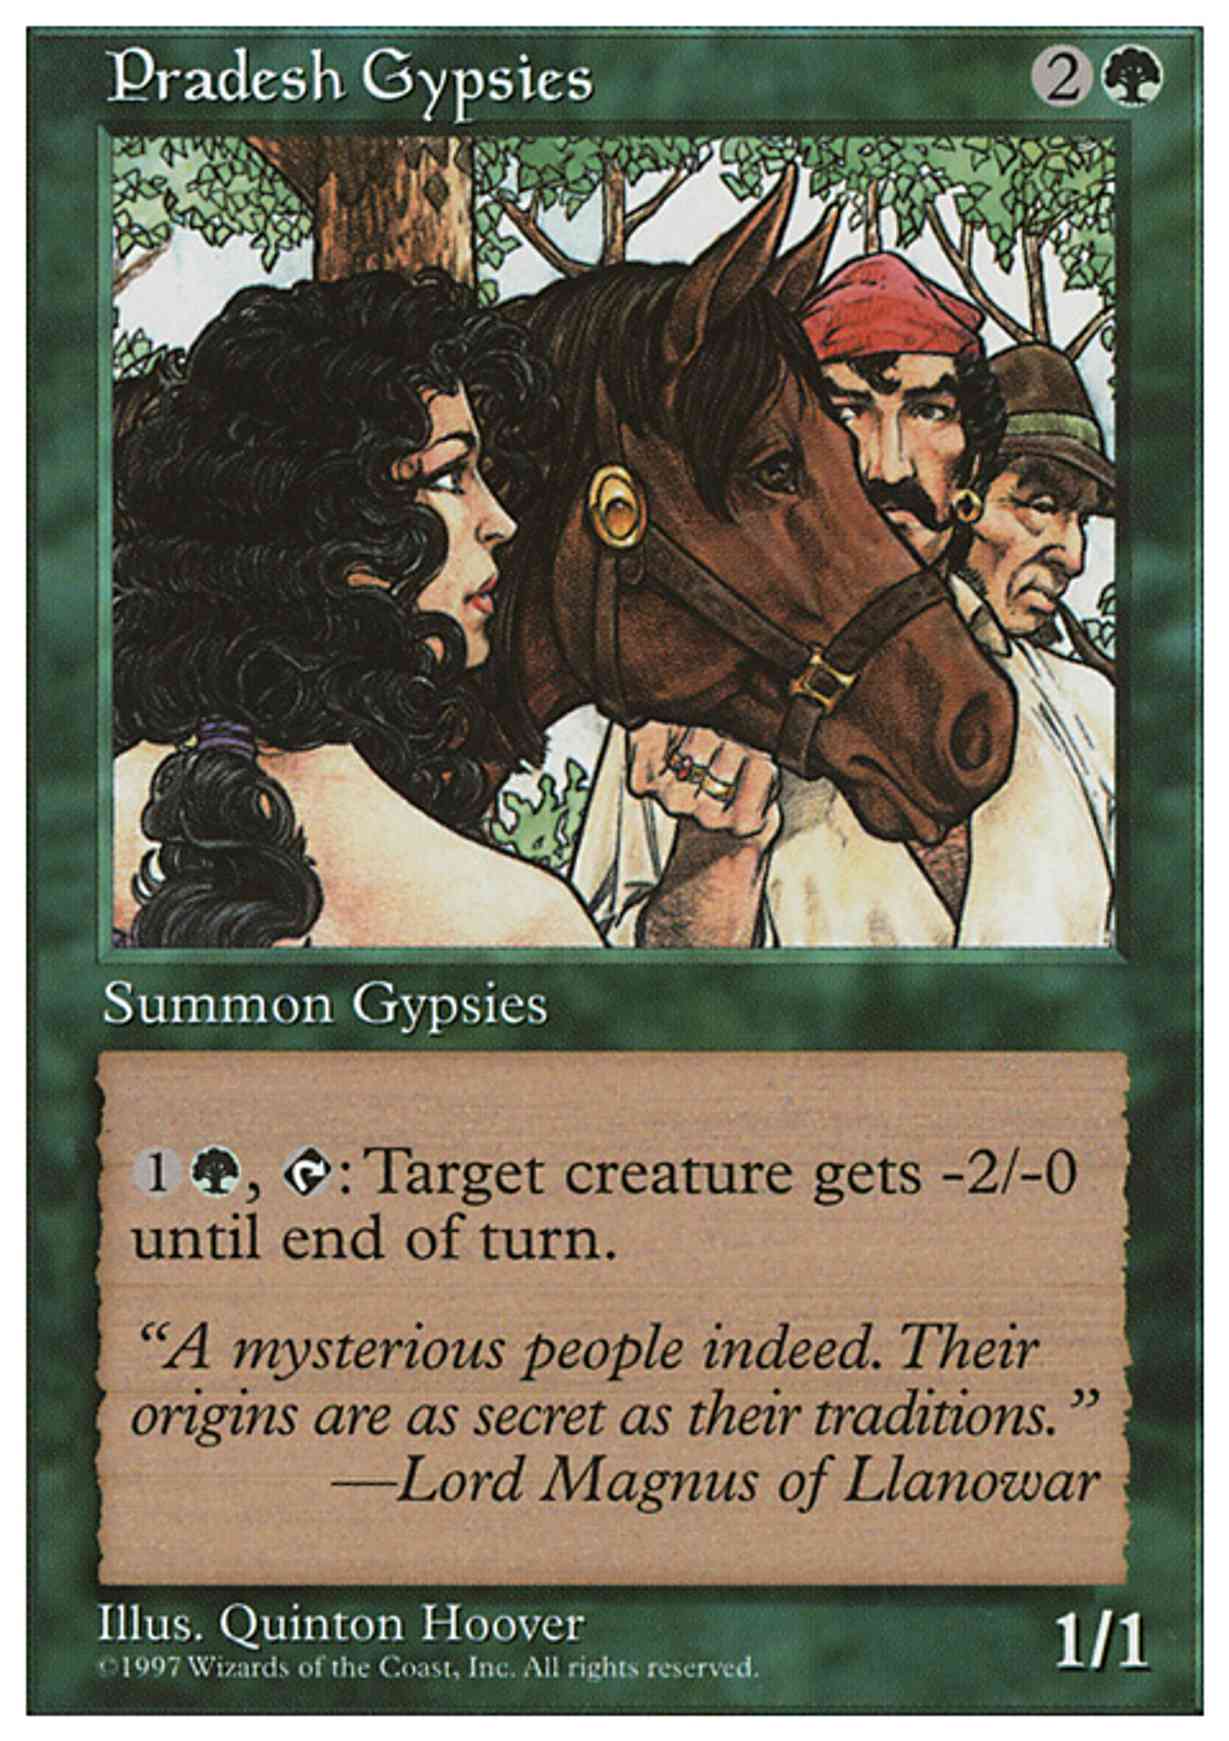 Pradesh Gypsies magic card front